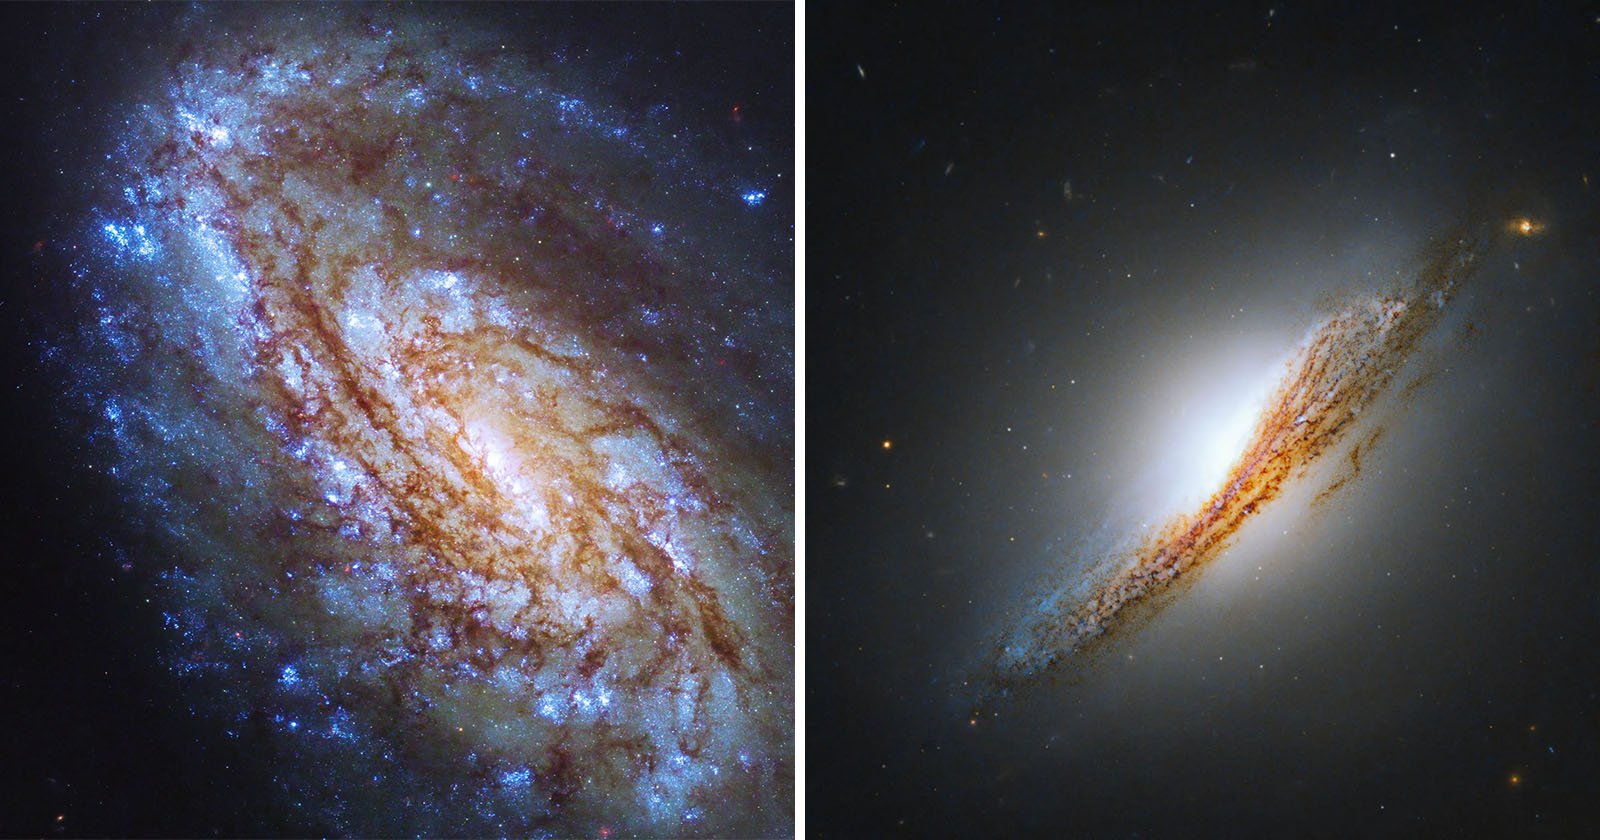  galaxies galore hubble celebrates photos 